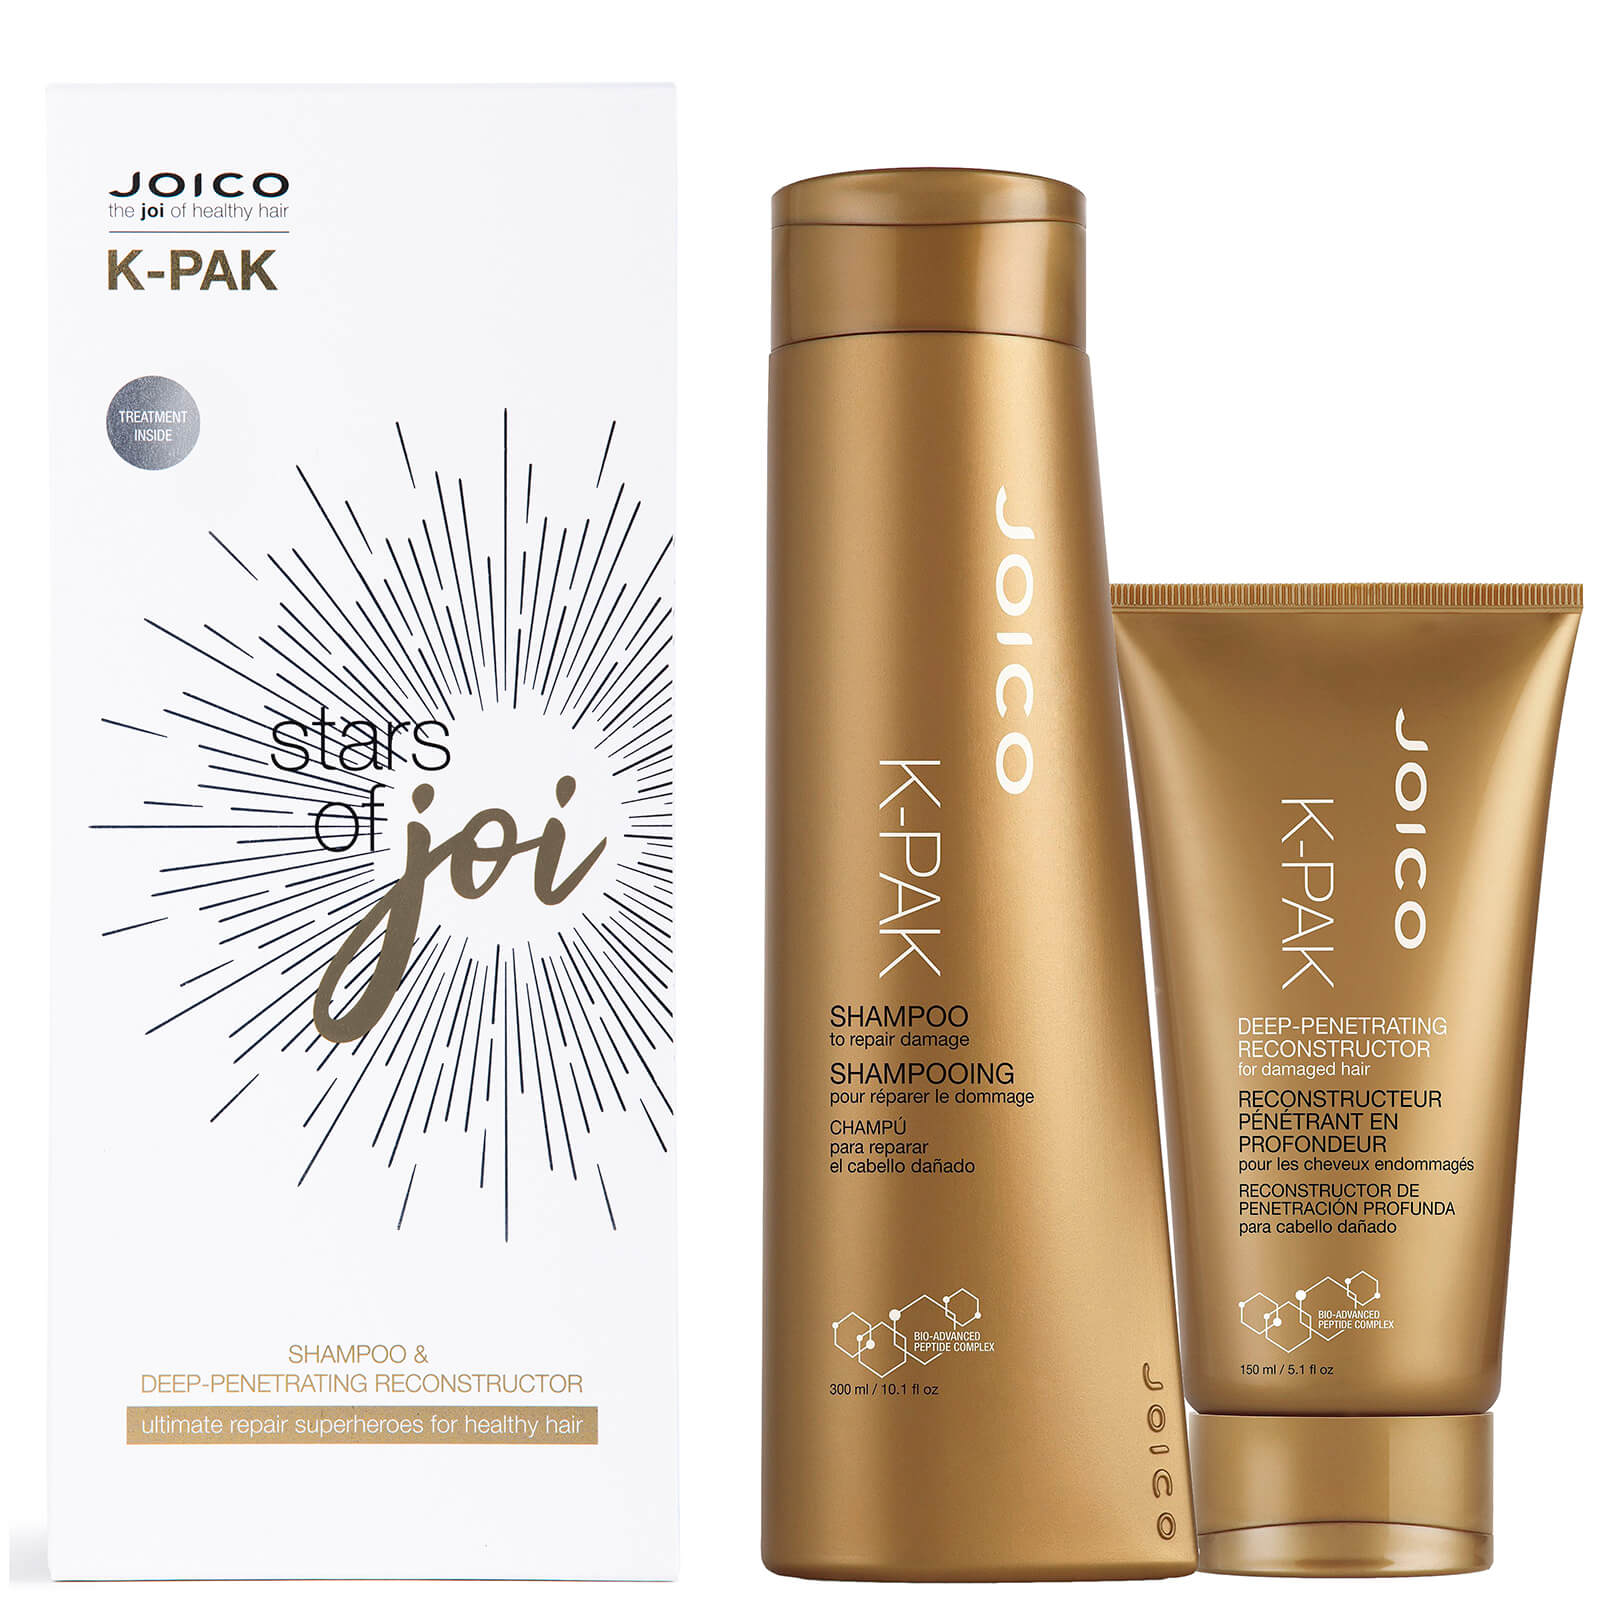 Joico Stars of Joi K-Pak Shampoo 300ml and Deep Penetrating Reconstructor Treatment 150ml